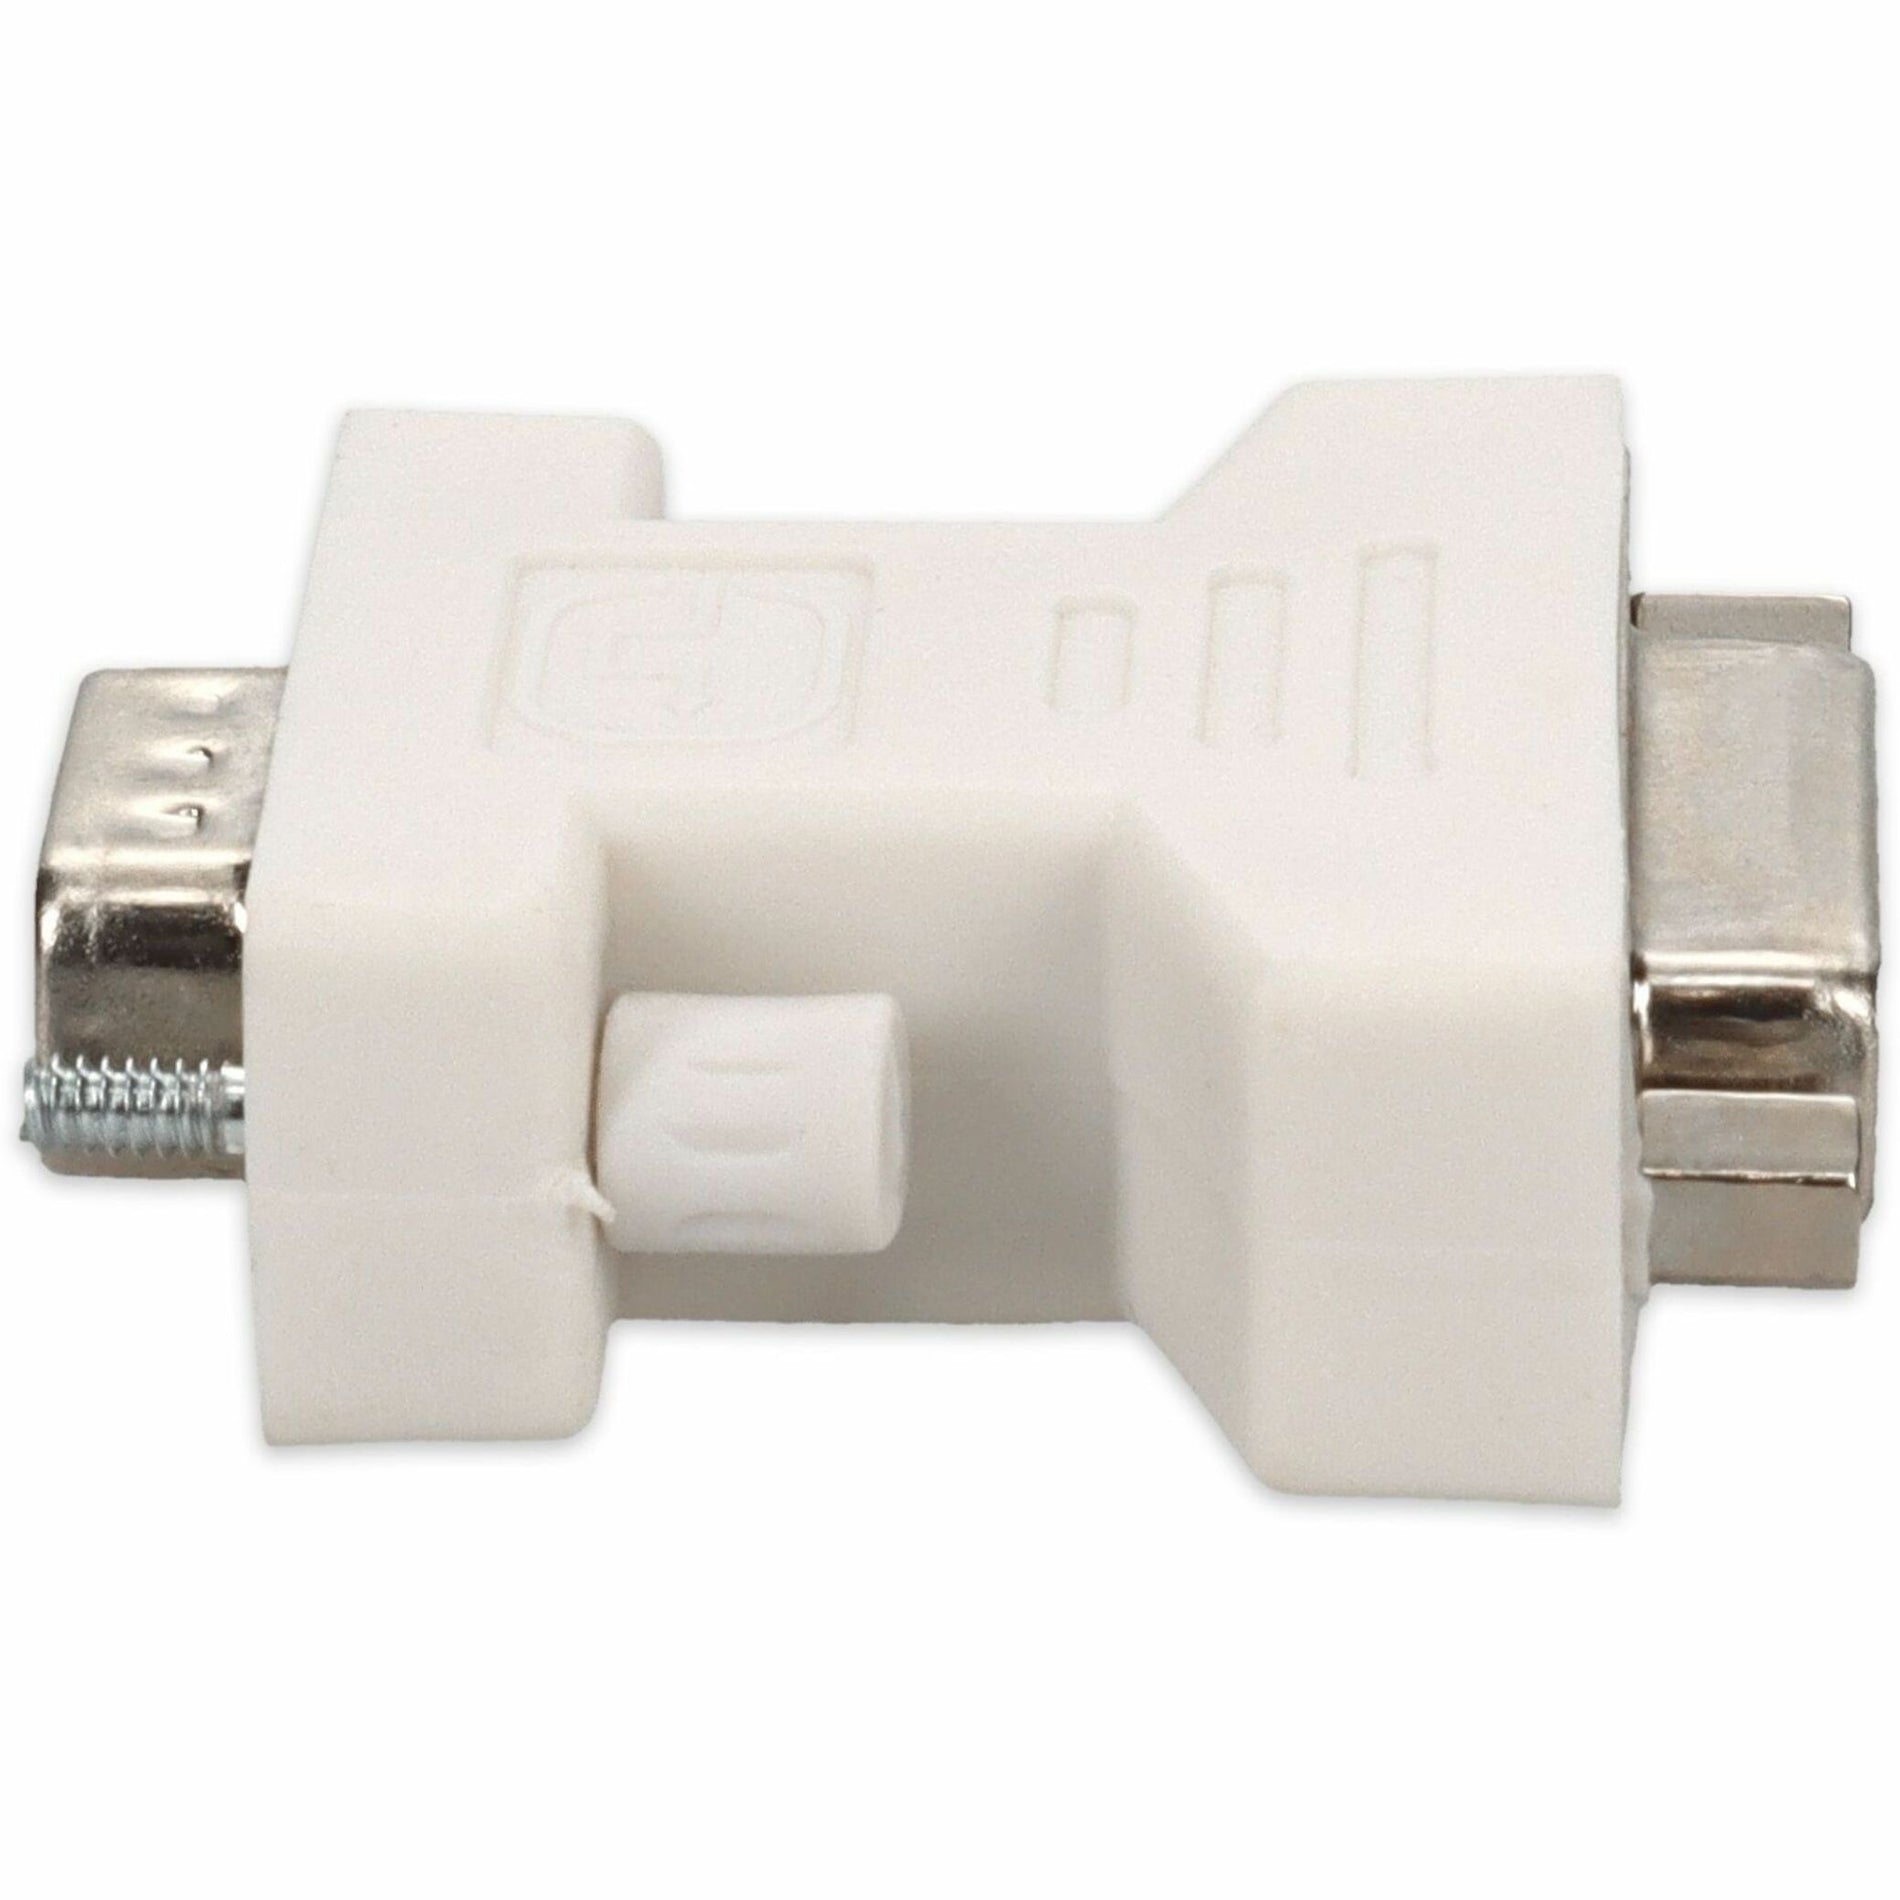 AddOn VGA2DVIW VGA/DVI Video Adapter, White, DVI-D Compatible M/F